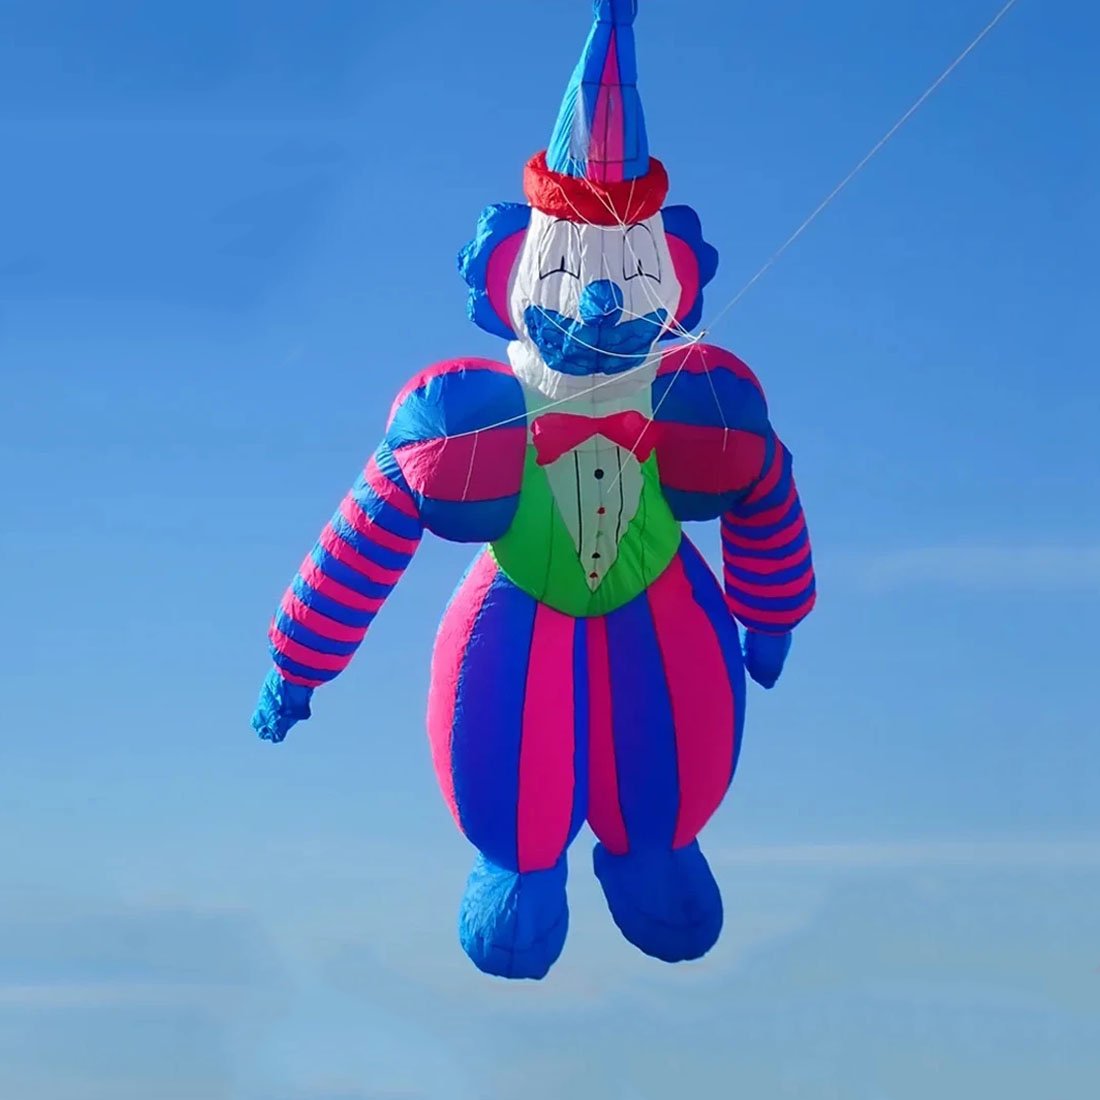 9KM 5m Clown Kite Line Laundry Kite Pendant Soft Inflatable Show Kite for Kite Festival 30D Ripstop Nylon with Bag